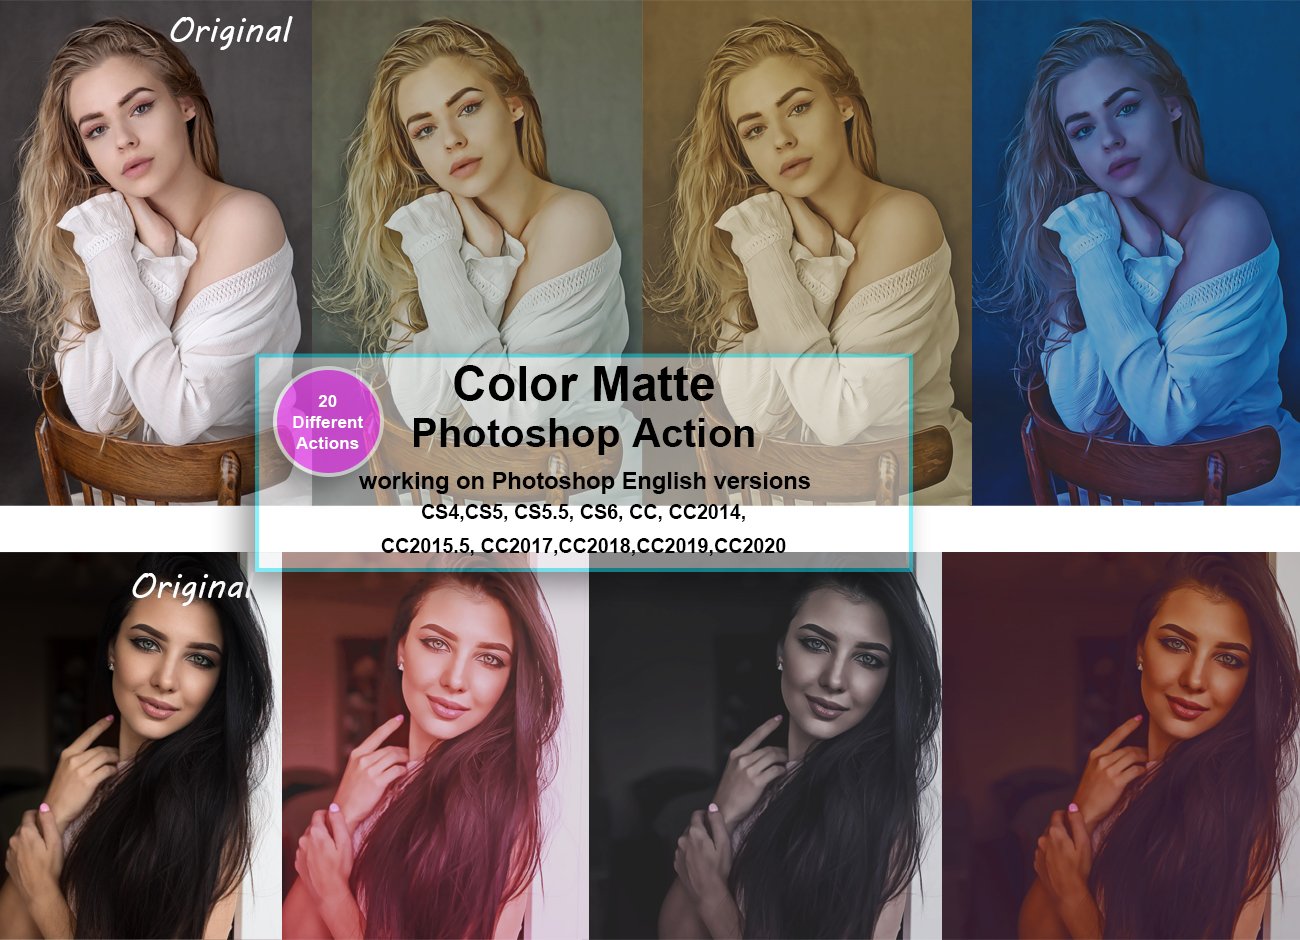 Color Matte Photoshop Actioncover image.